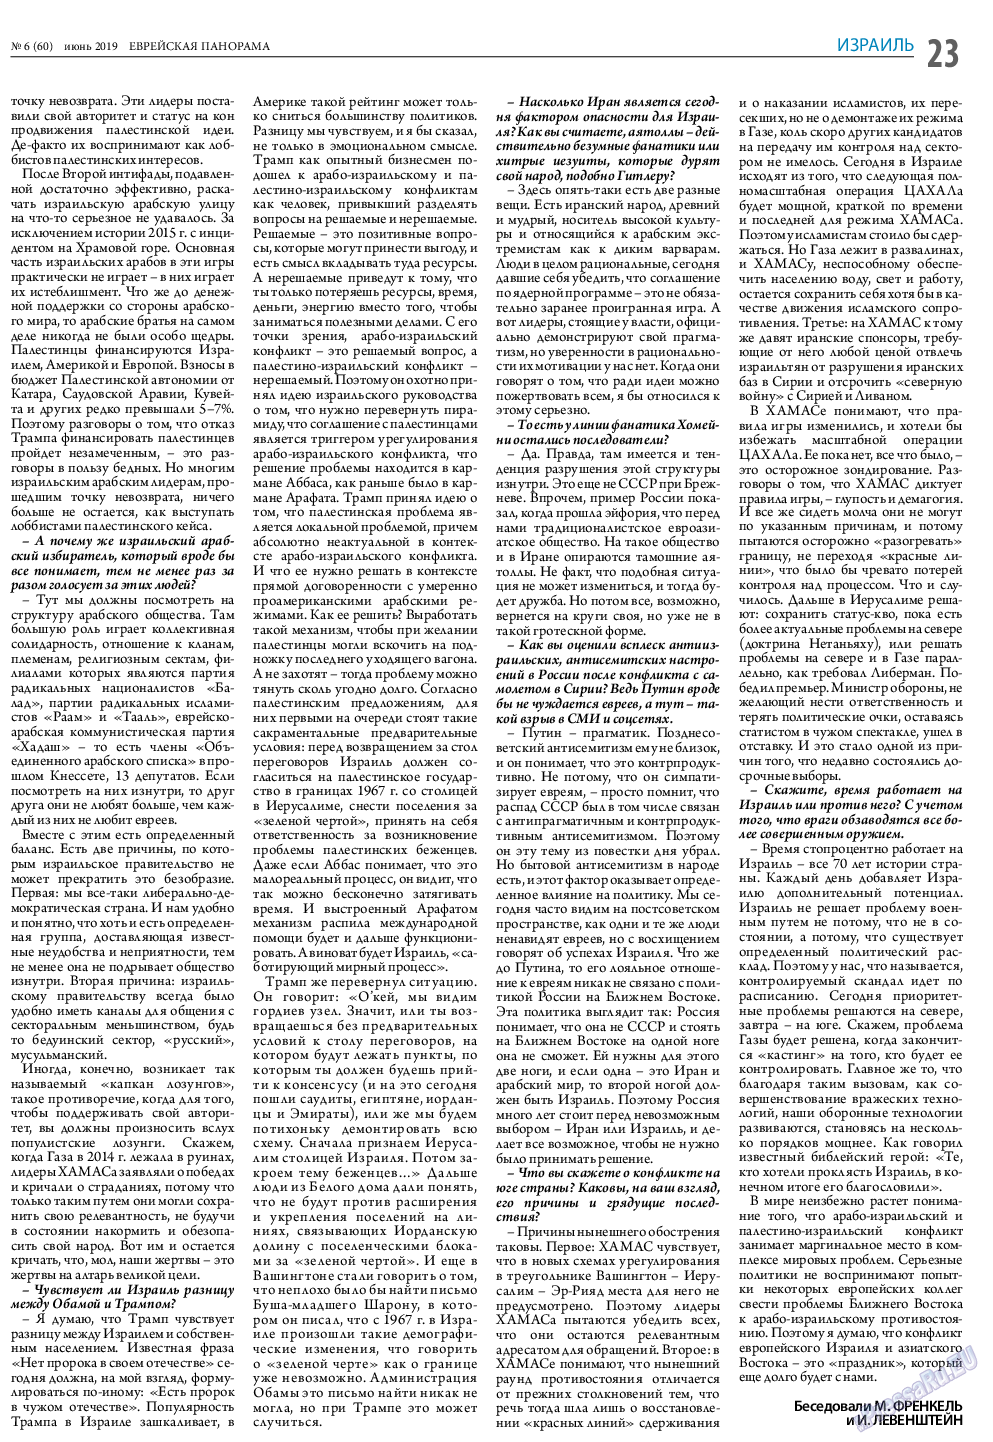 Еврейская панорама, газета. 2019 №6 стр.23